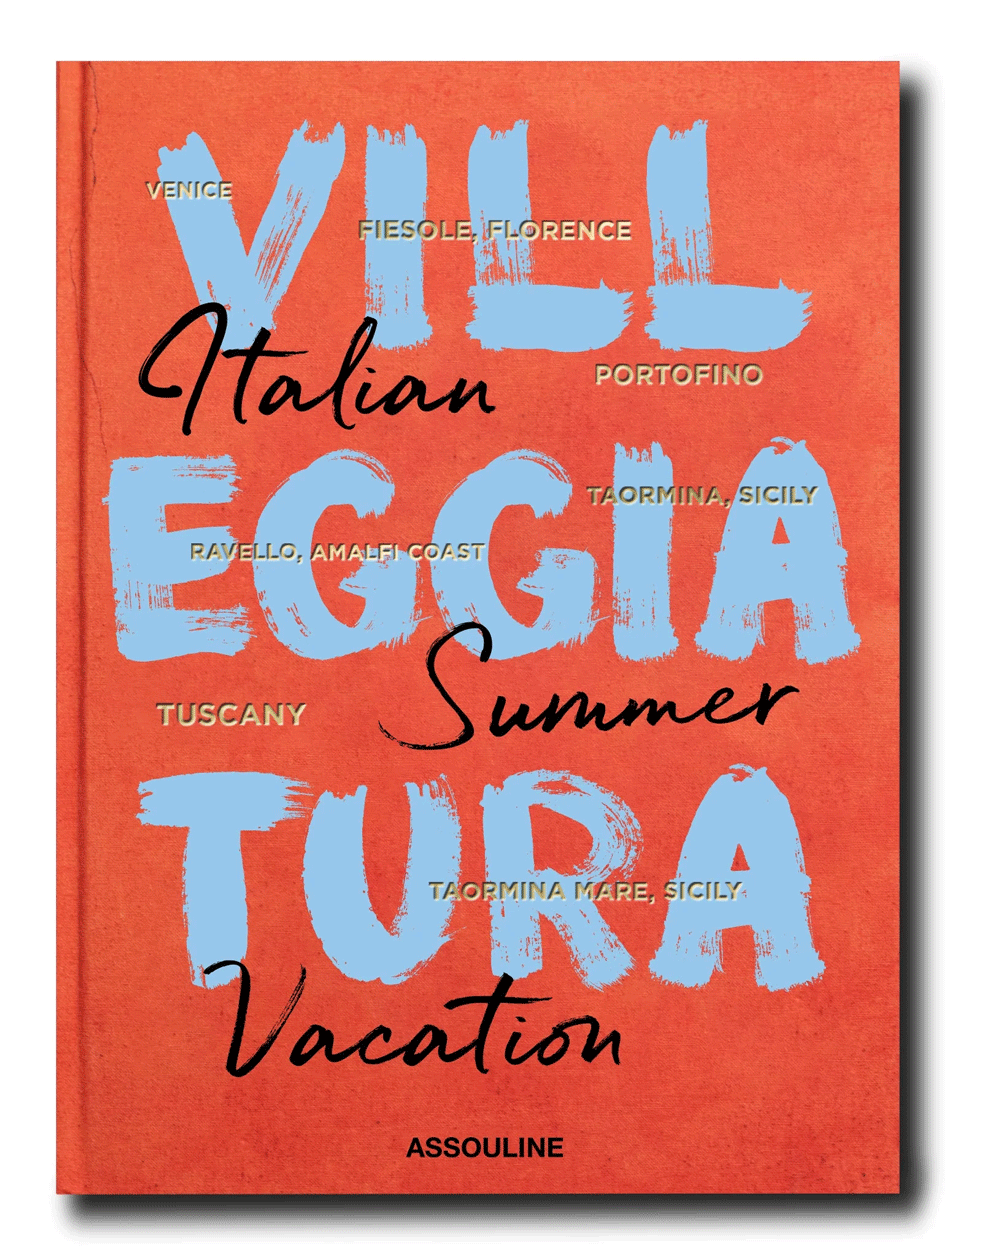 Villeggiatura: Italian Summer Vacation by Cesare Cunaccia